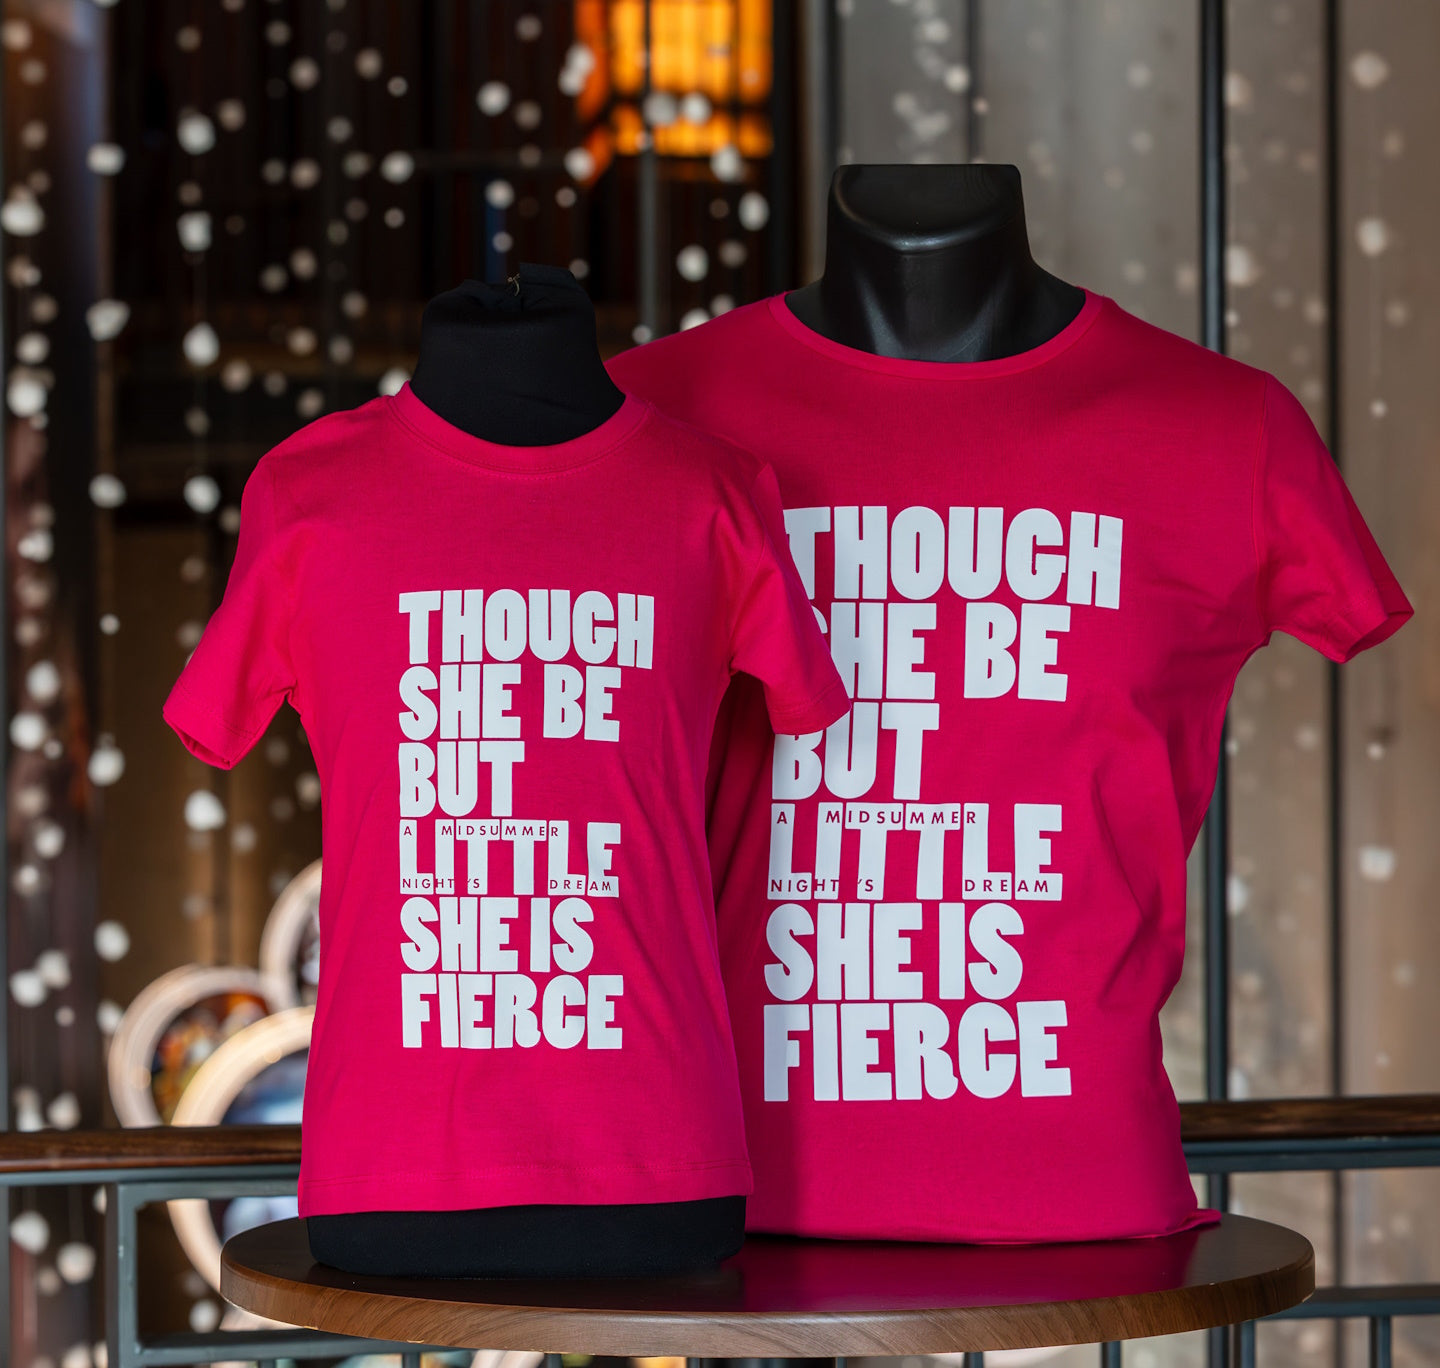 Kids T Shirt: Though She Be but Little She Is Fierce Pink